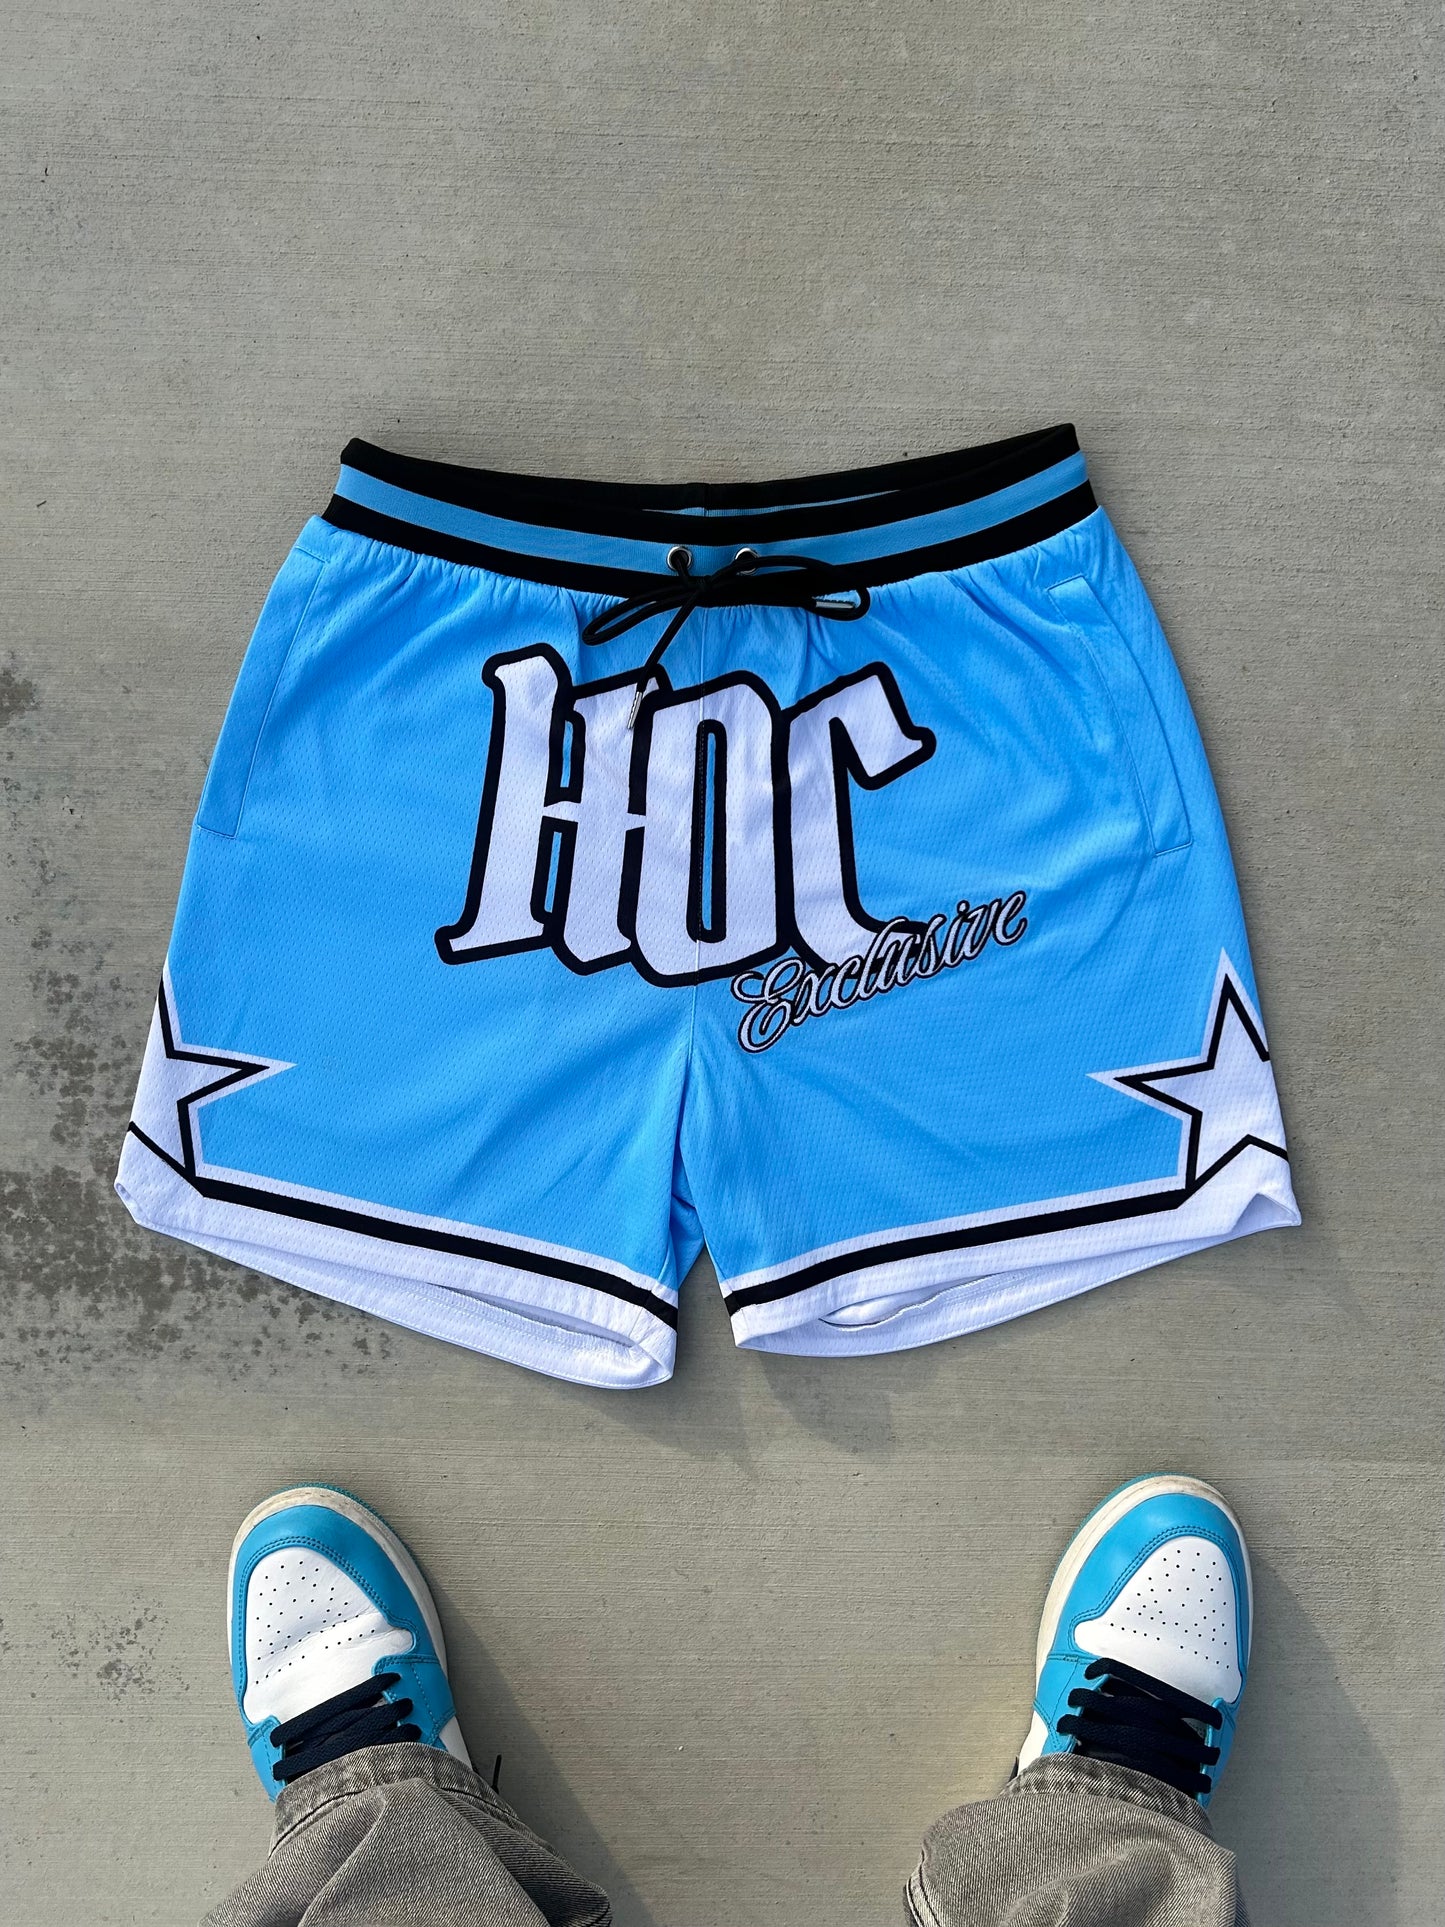 HOC GARMENTS Exclusive "Blue" Shorts